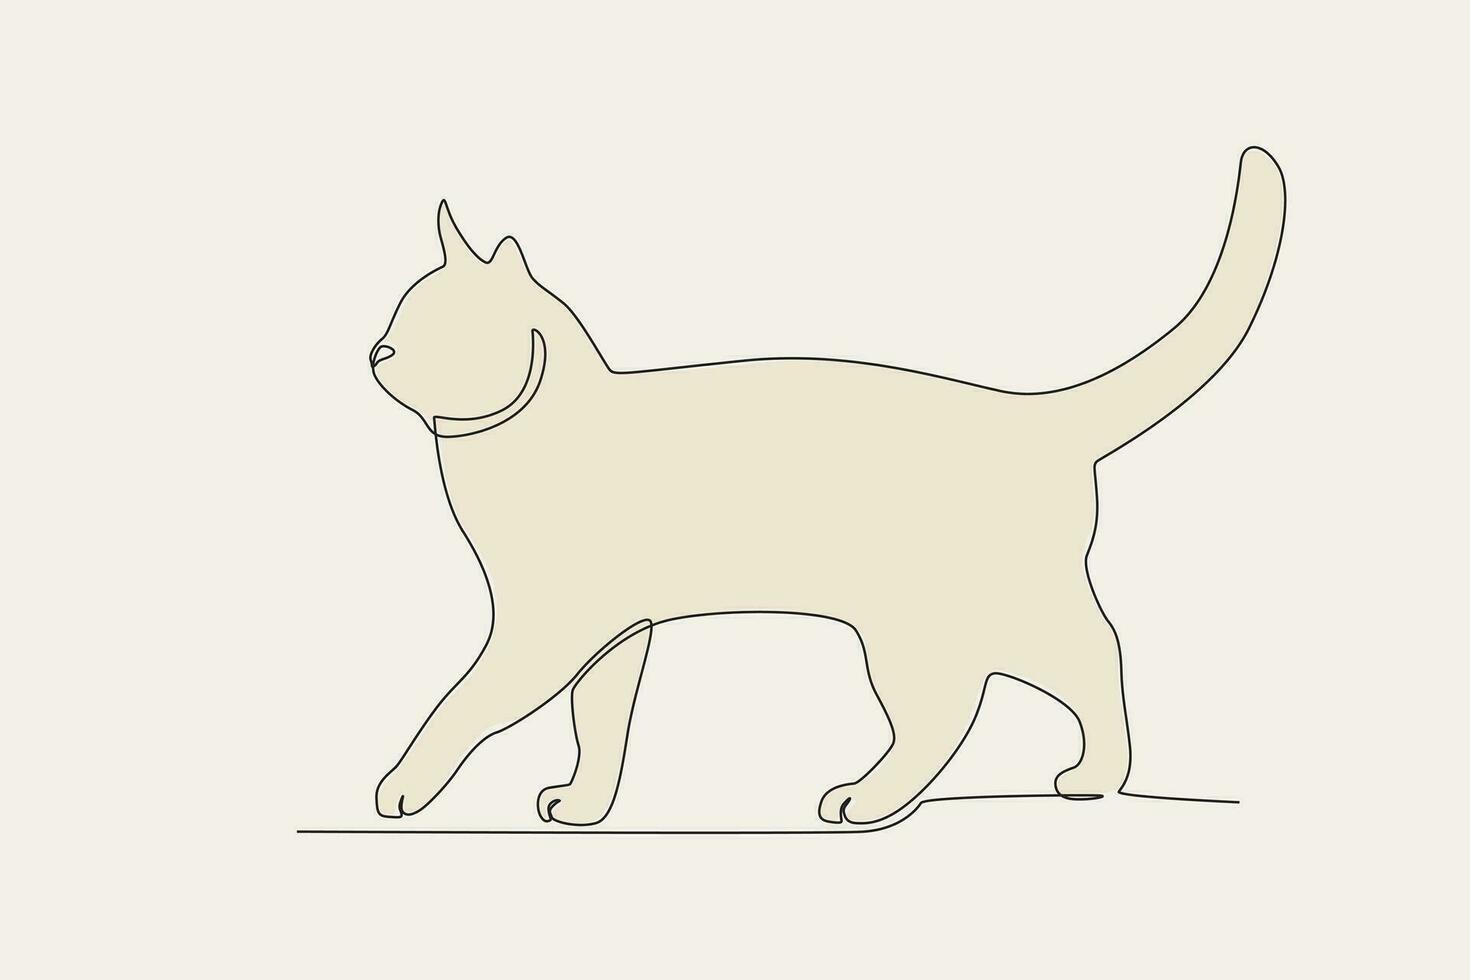 Color illustration of a cat walking vector